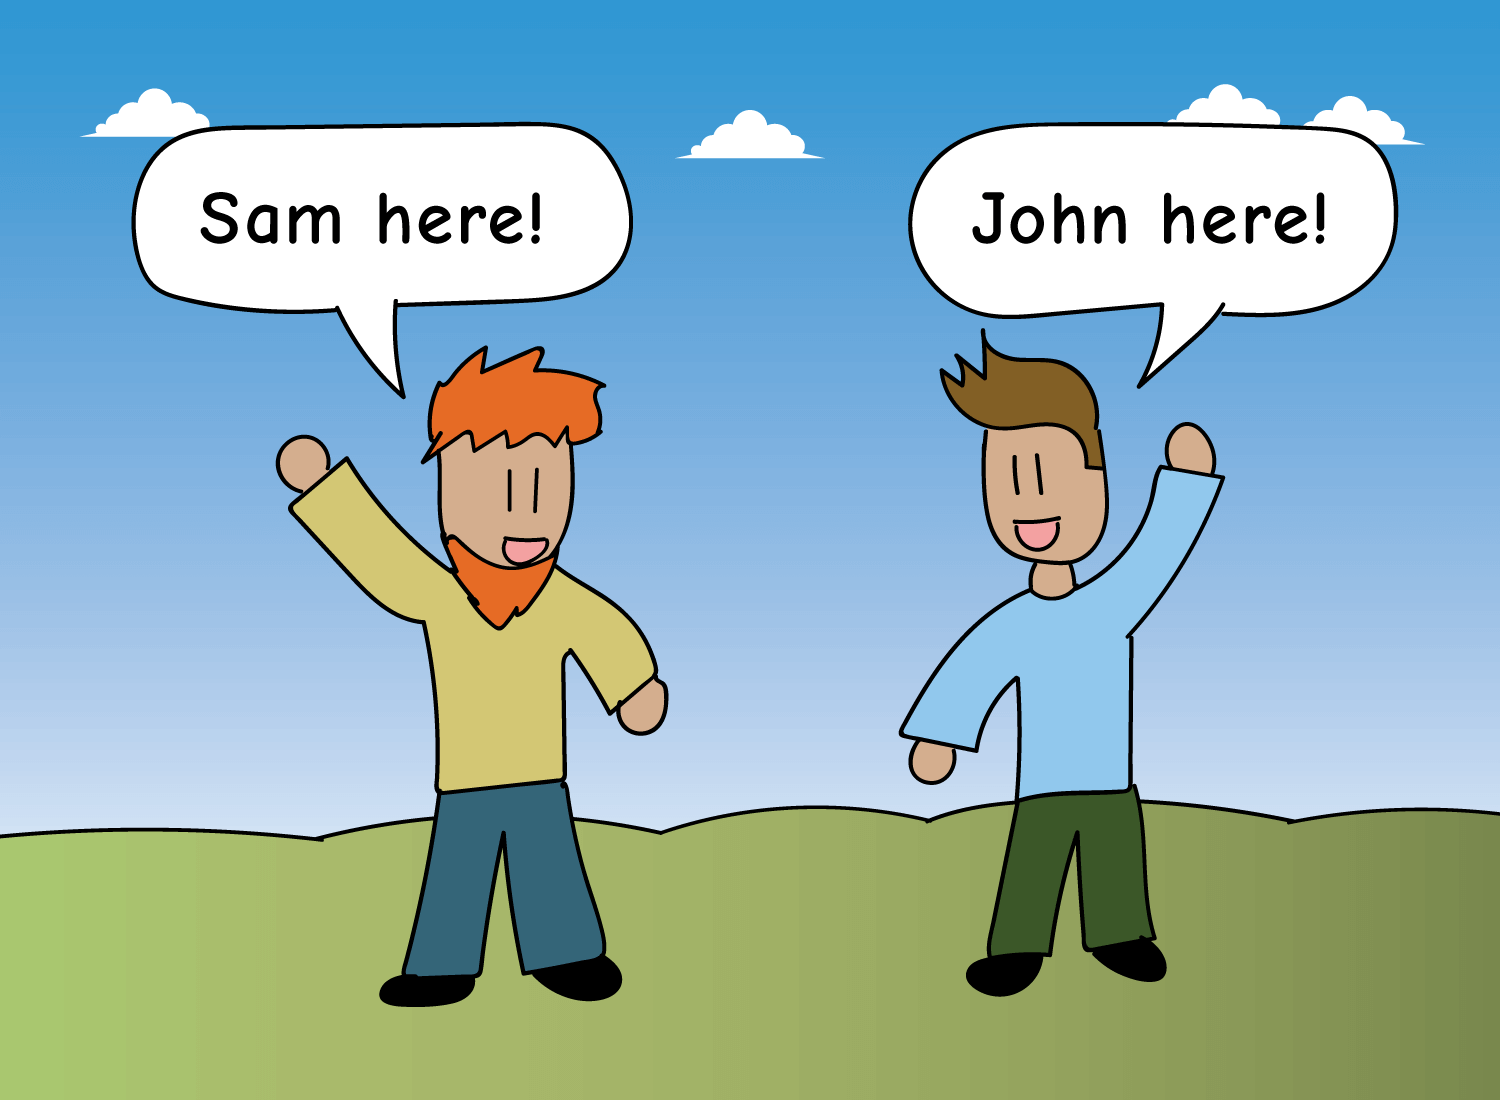 sam and john - interest-first friendships